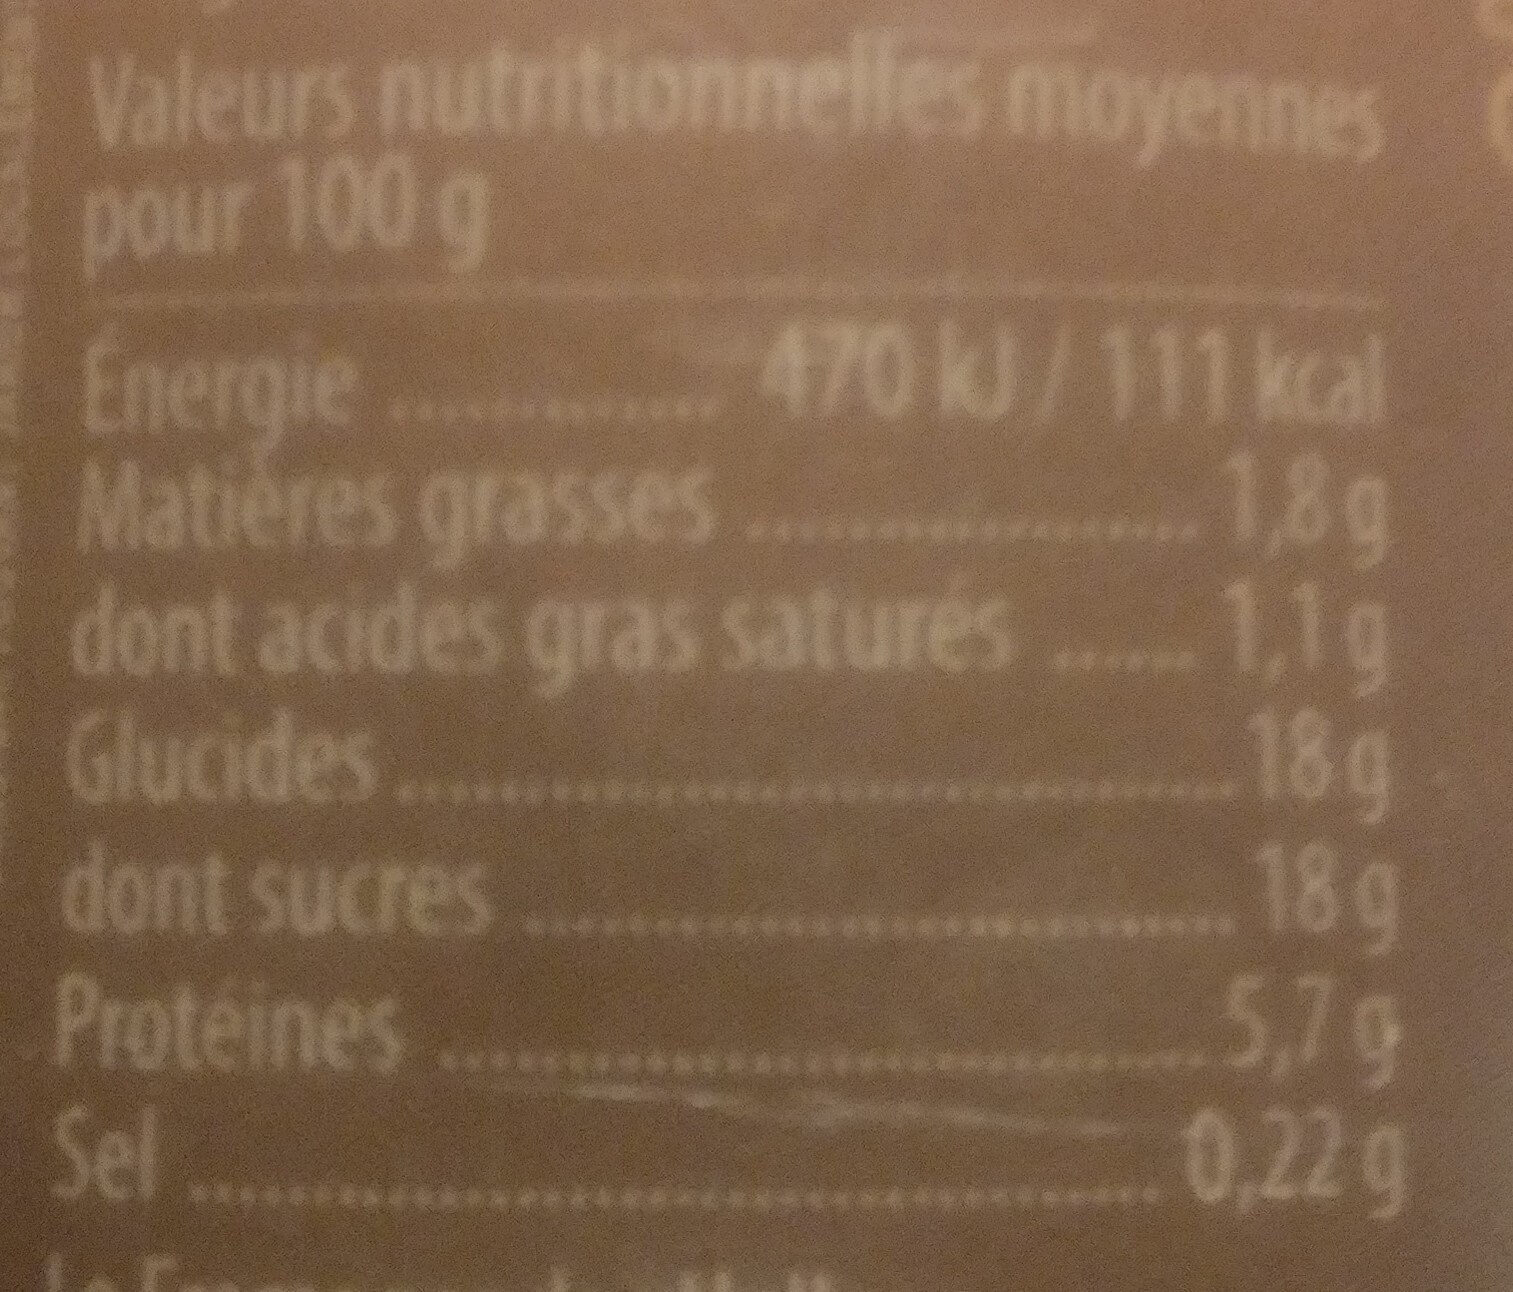 Les miamandises chocolat - Näringsfakta - fr